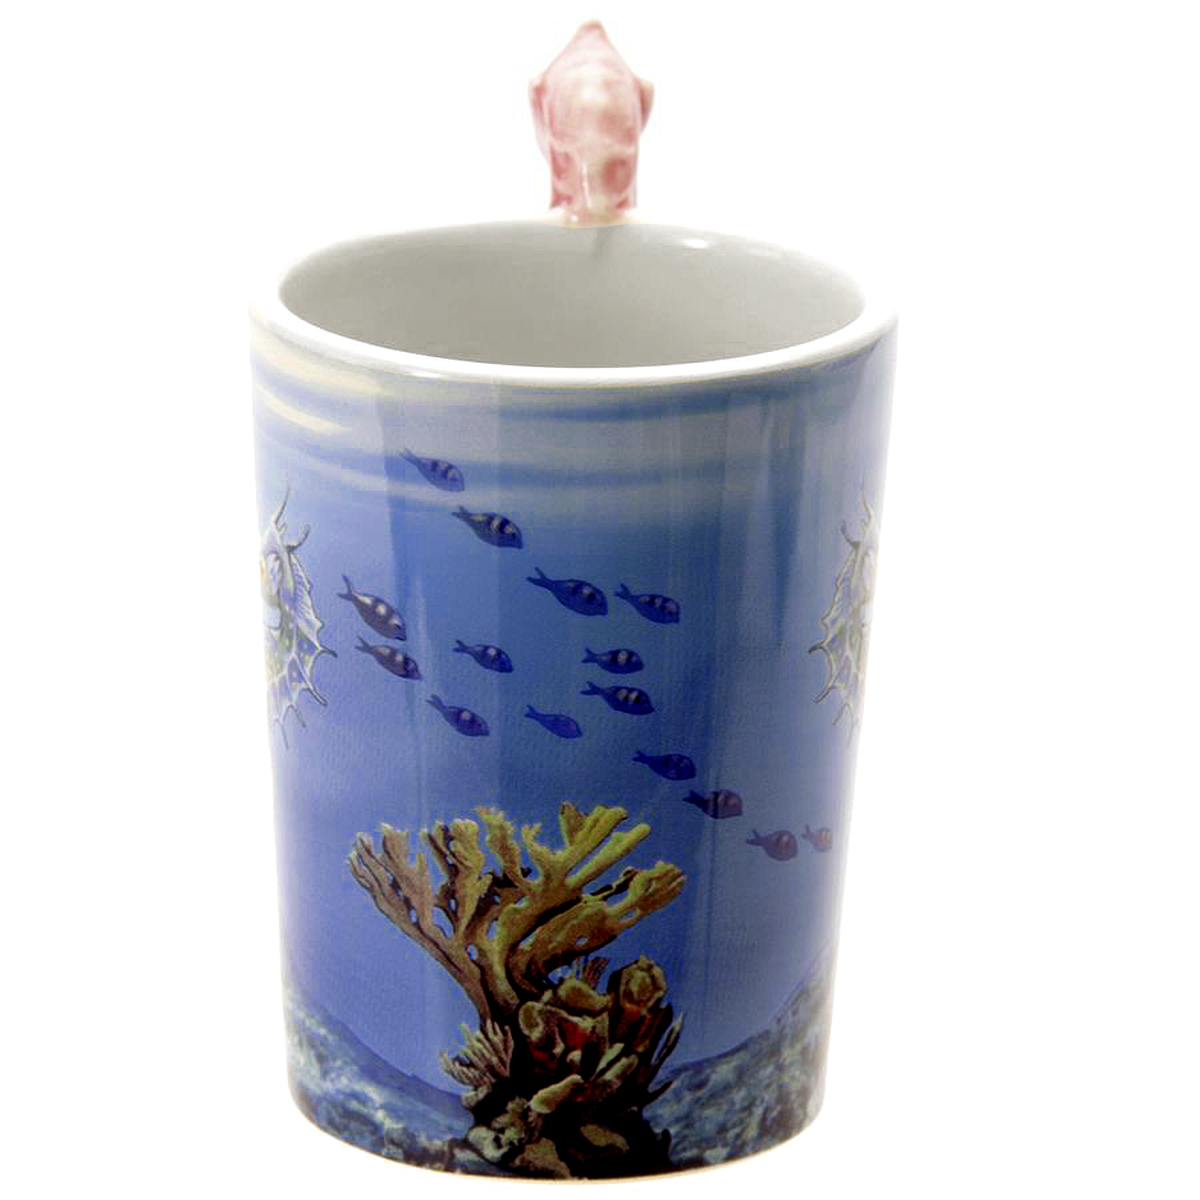 Premium Kunst 3D Kaffeetasse Kaffeebecher Seepferdchen Tasse Lisa Parker Design